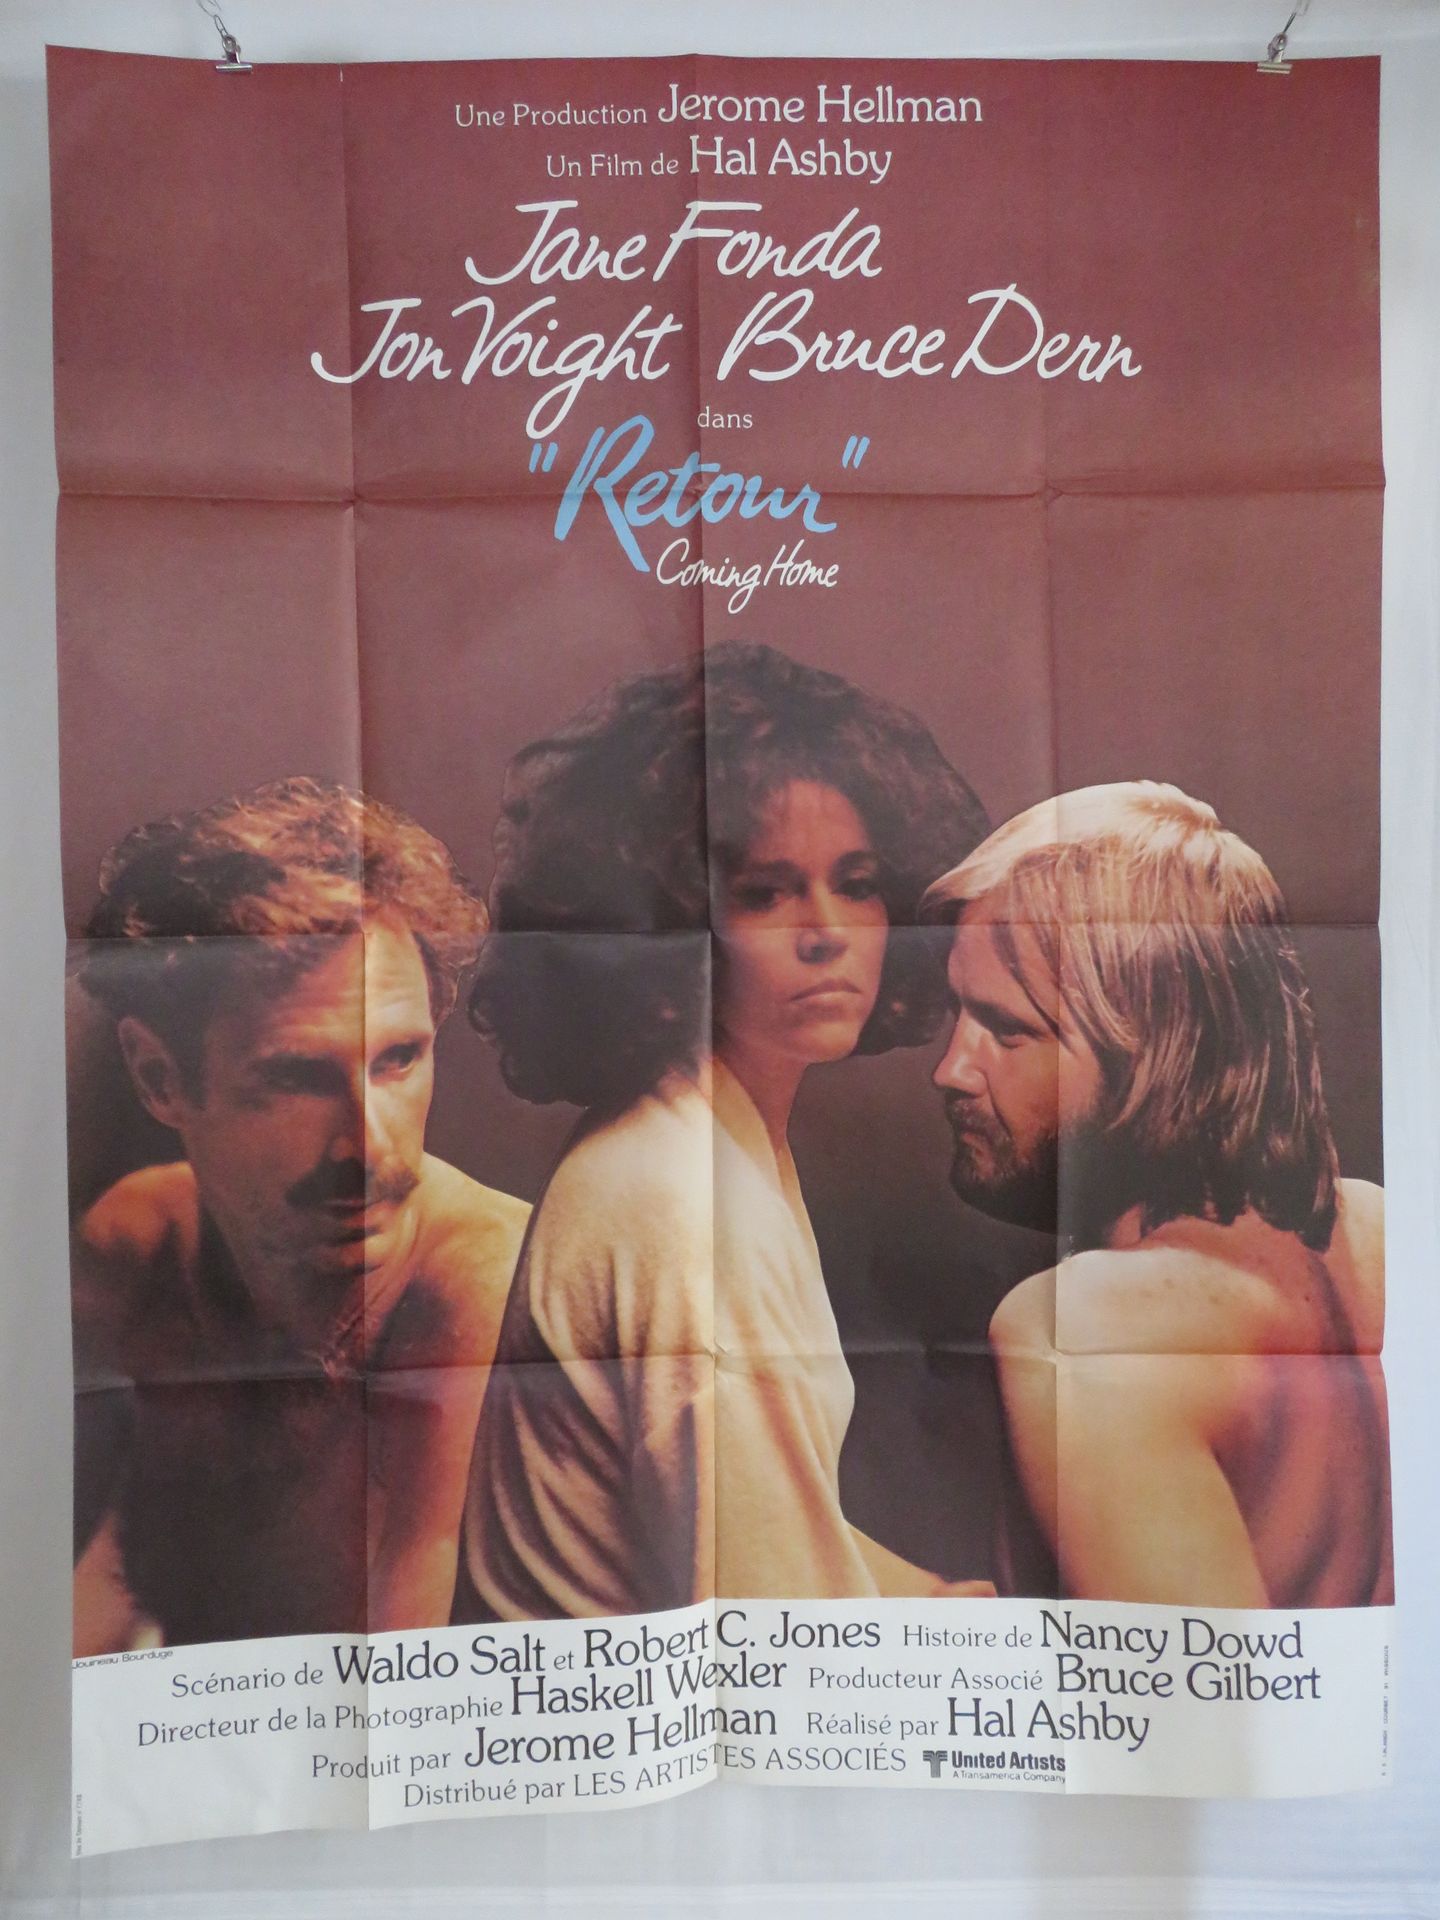 Null "RETORNO" (1978) de Hal ASHBY con Jane Fonda, Jon Voight, Bruce Dern, Rober&hellip;